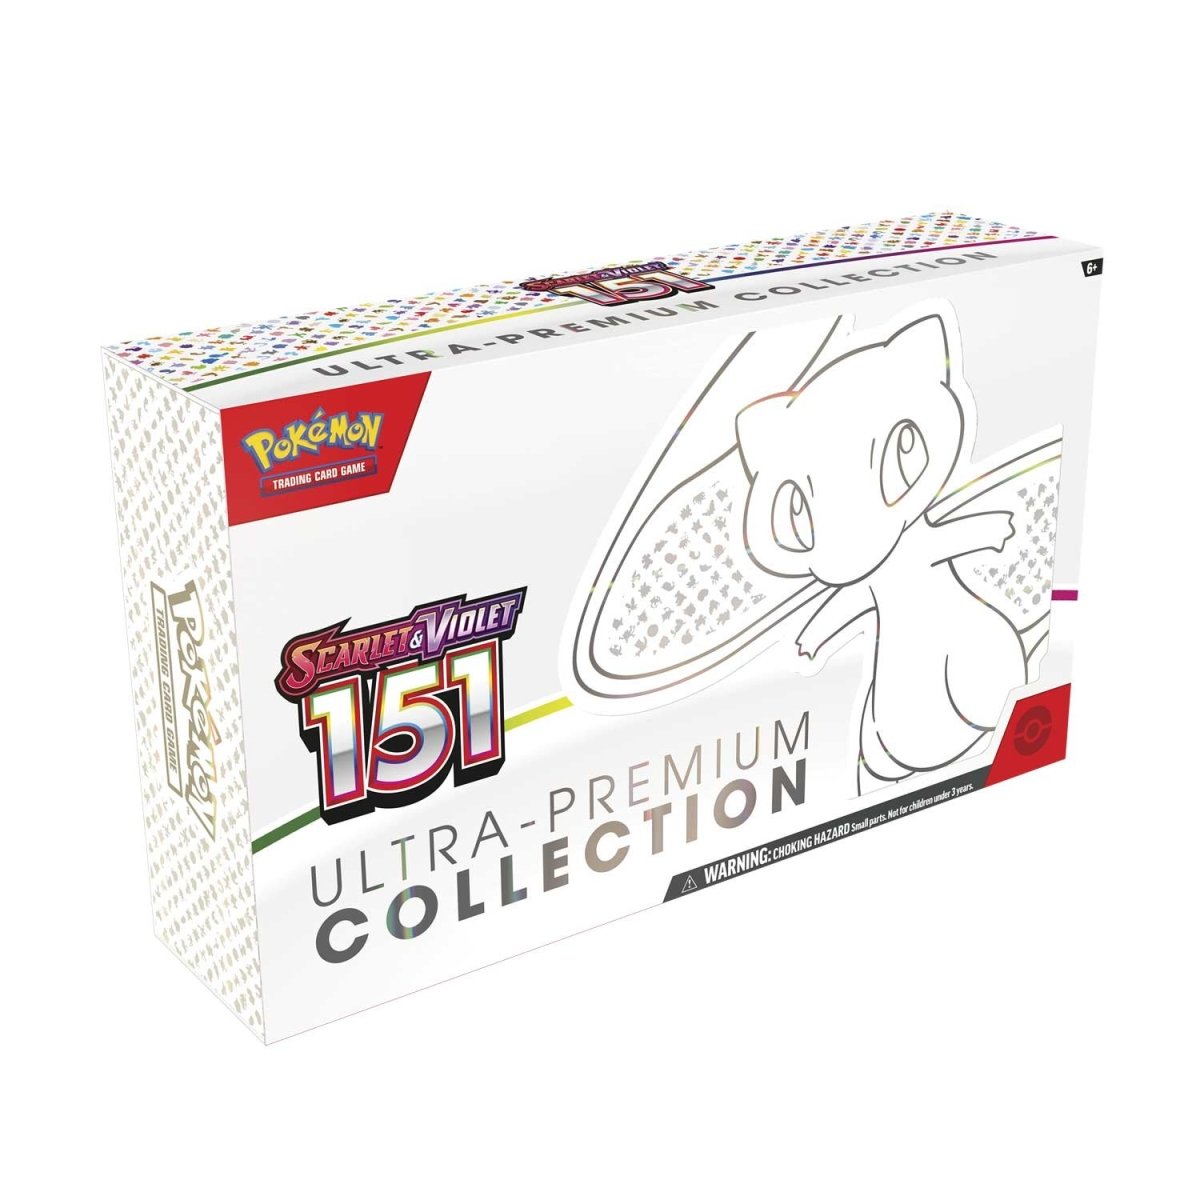 Pokemon TCG: Scarlet & Violet - 151 Ultra-Premium Collection | Black Swamp Games